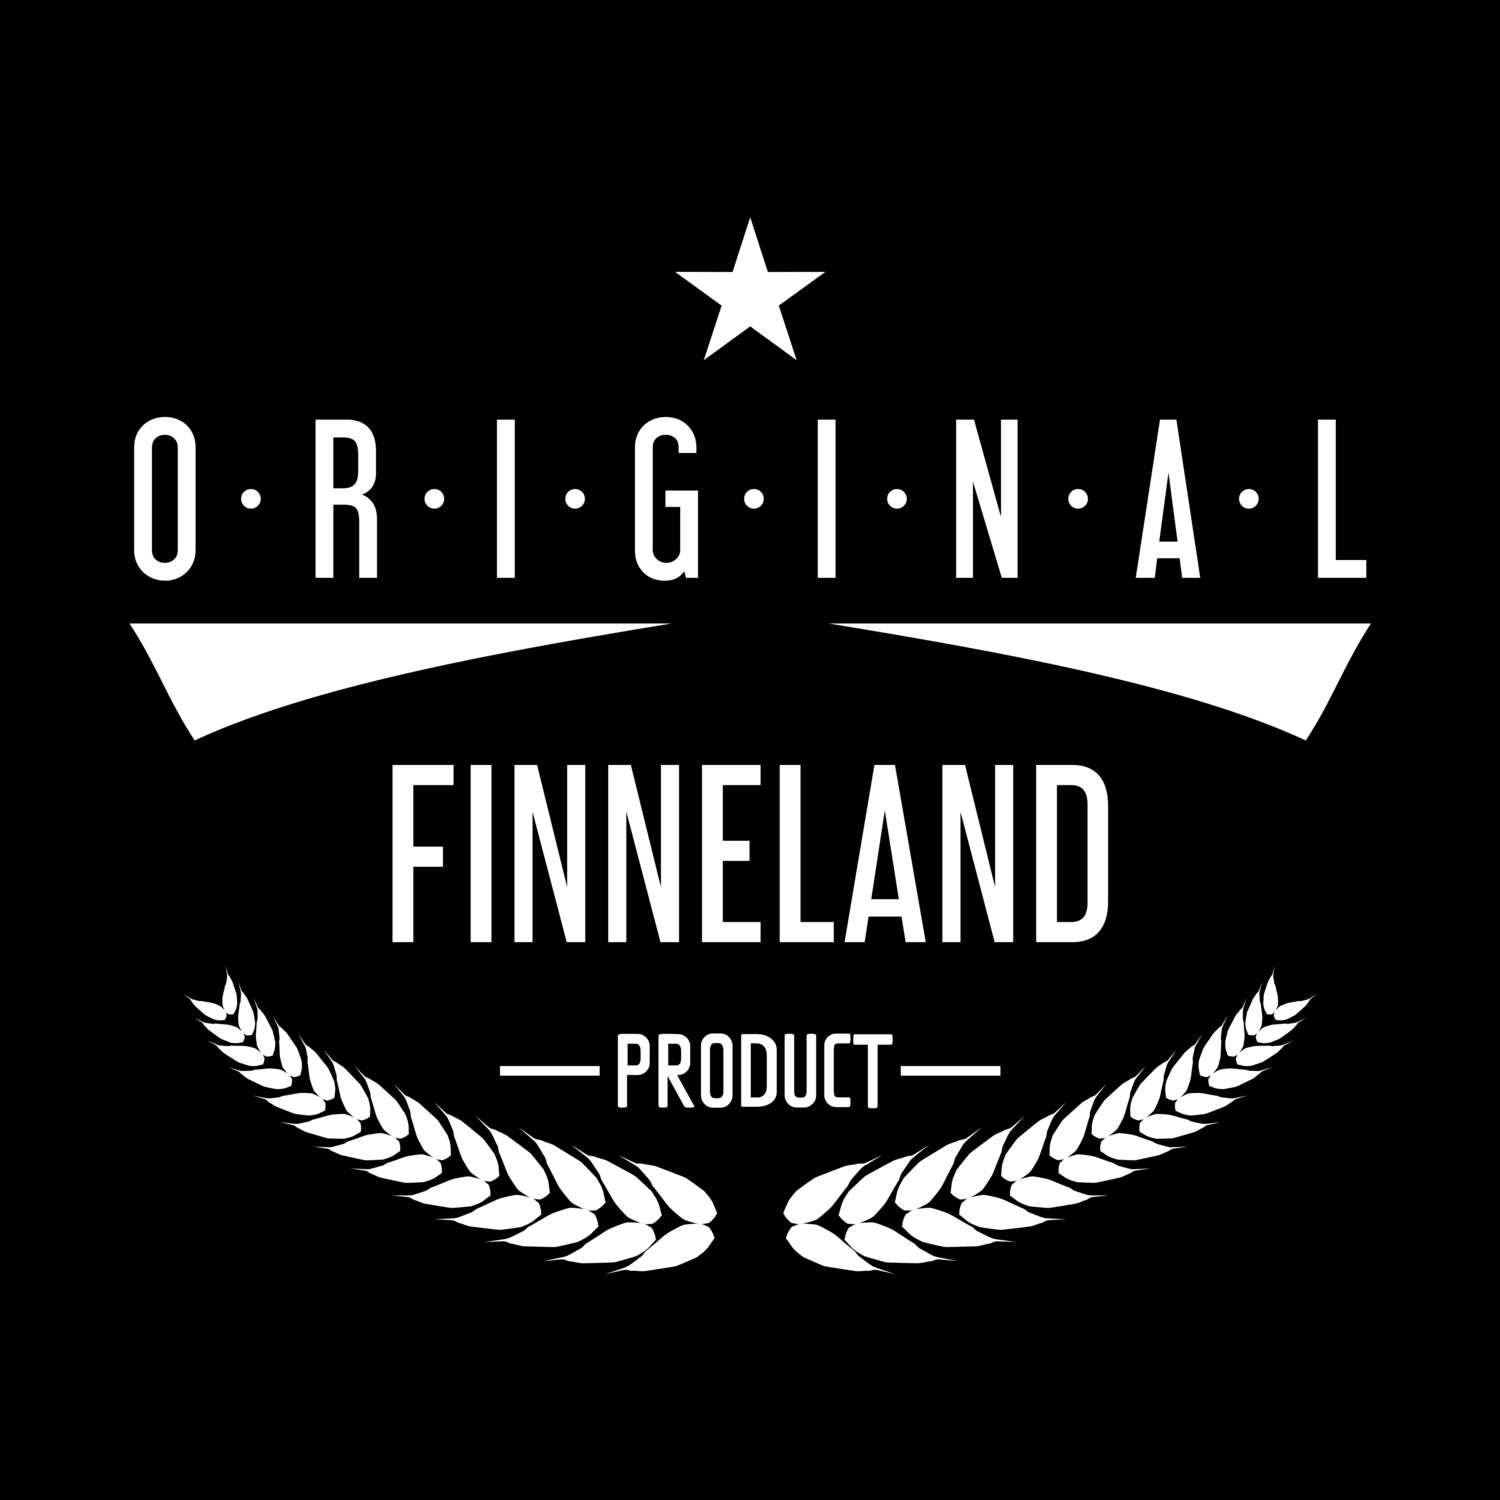 Finneland T-Shirt »Original Product«